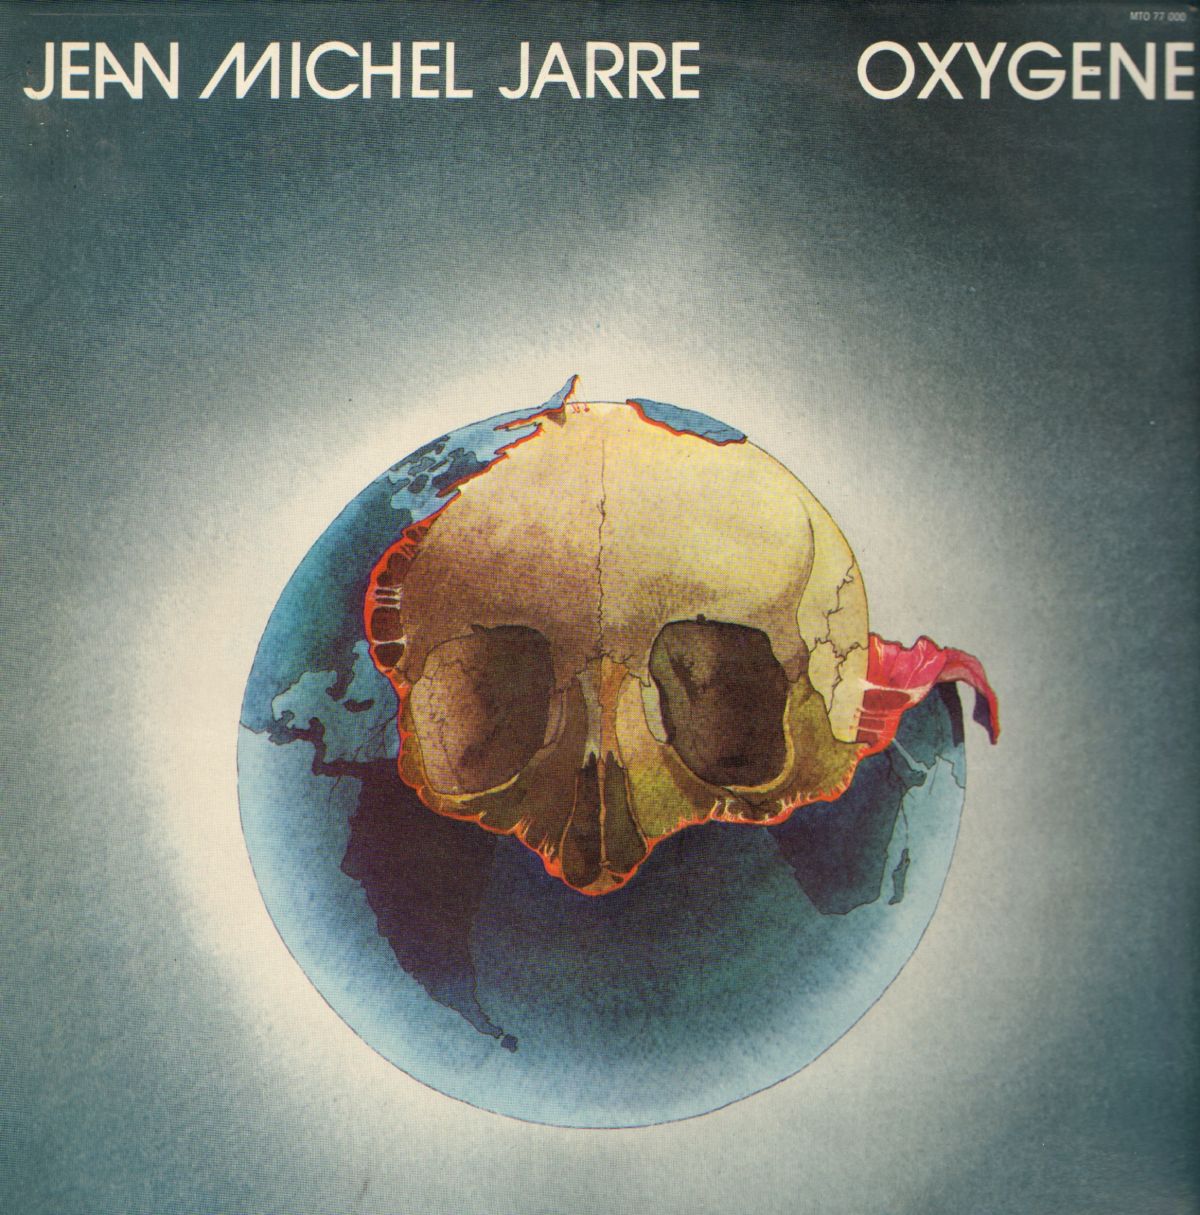 Альбом Oxygene 1976 года